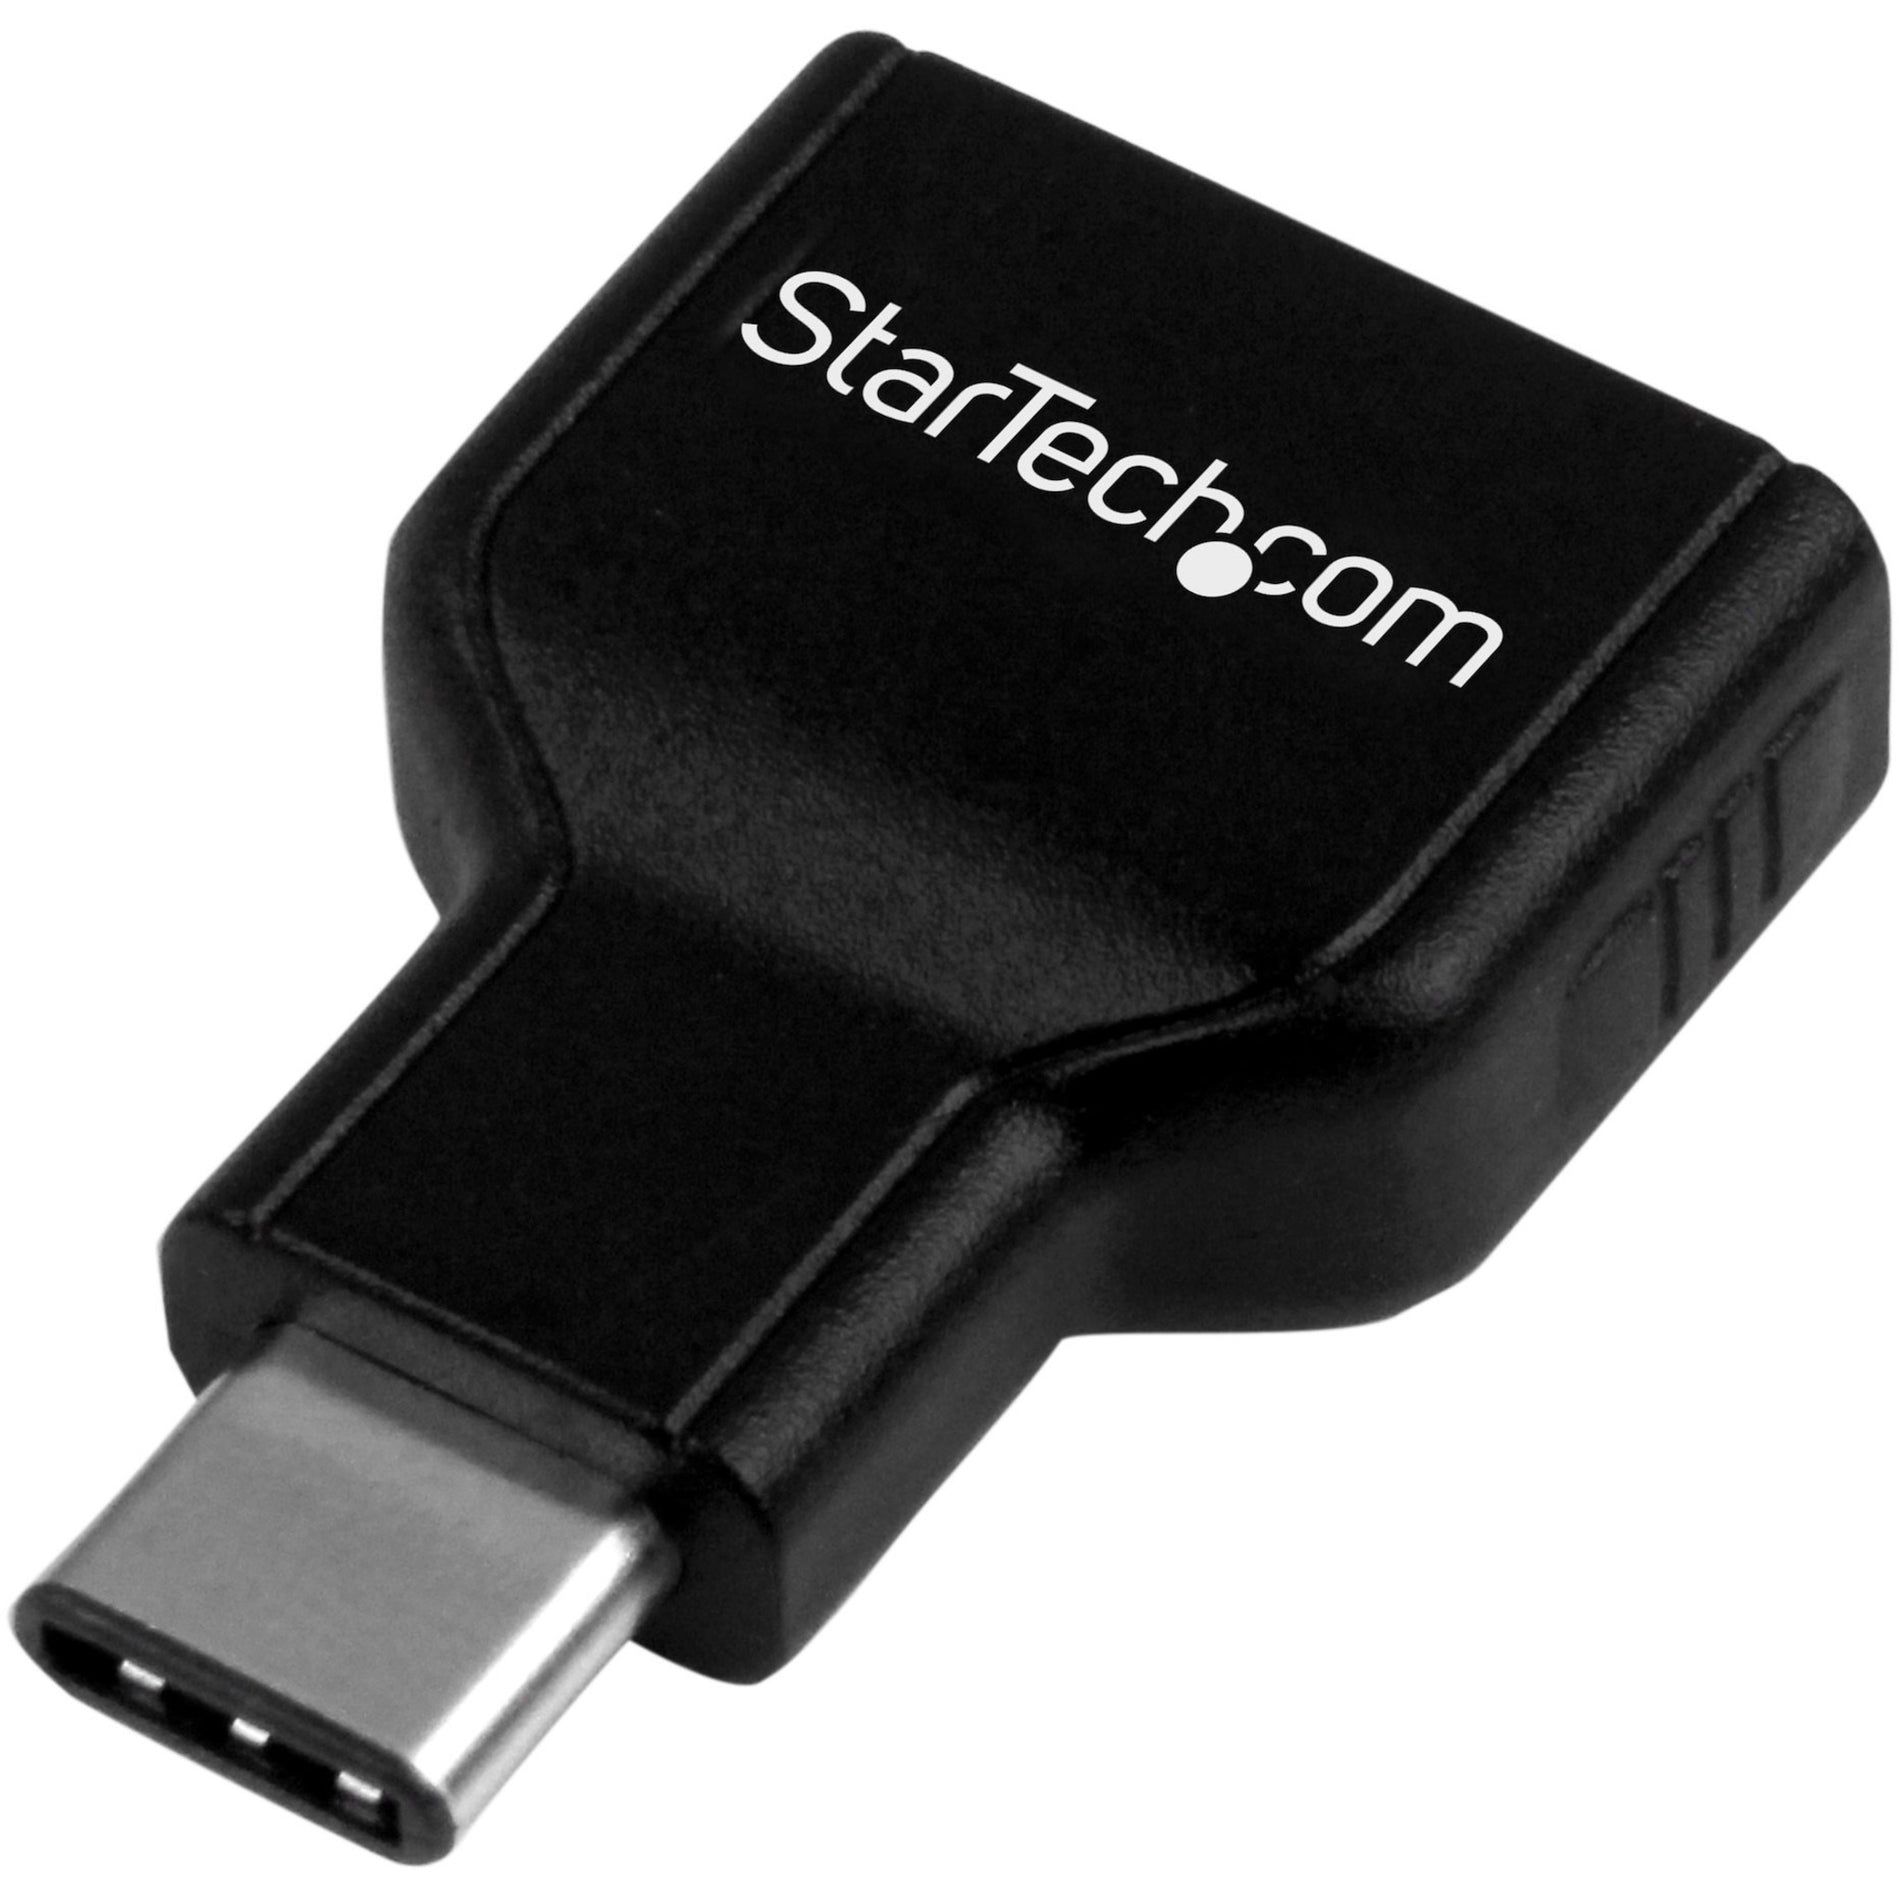 Adaptador USB-C a USB-A M/H - USB 3.0 Conecta a computadoras portátiles USB C como Apple MacBook Chromebook Pixel y más - StarTech.com